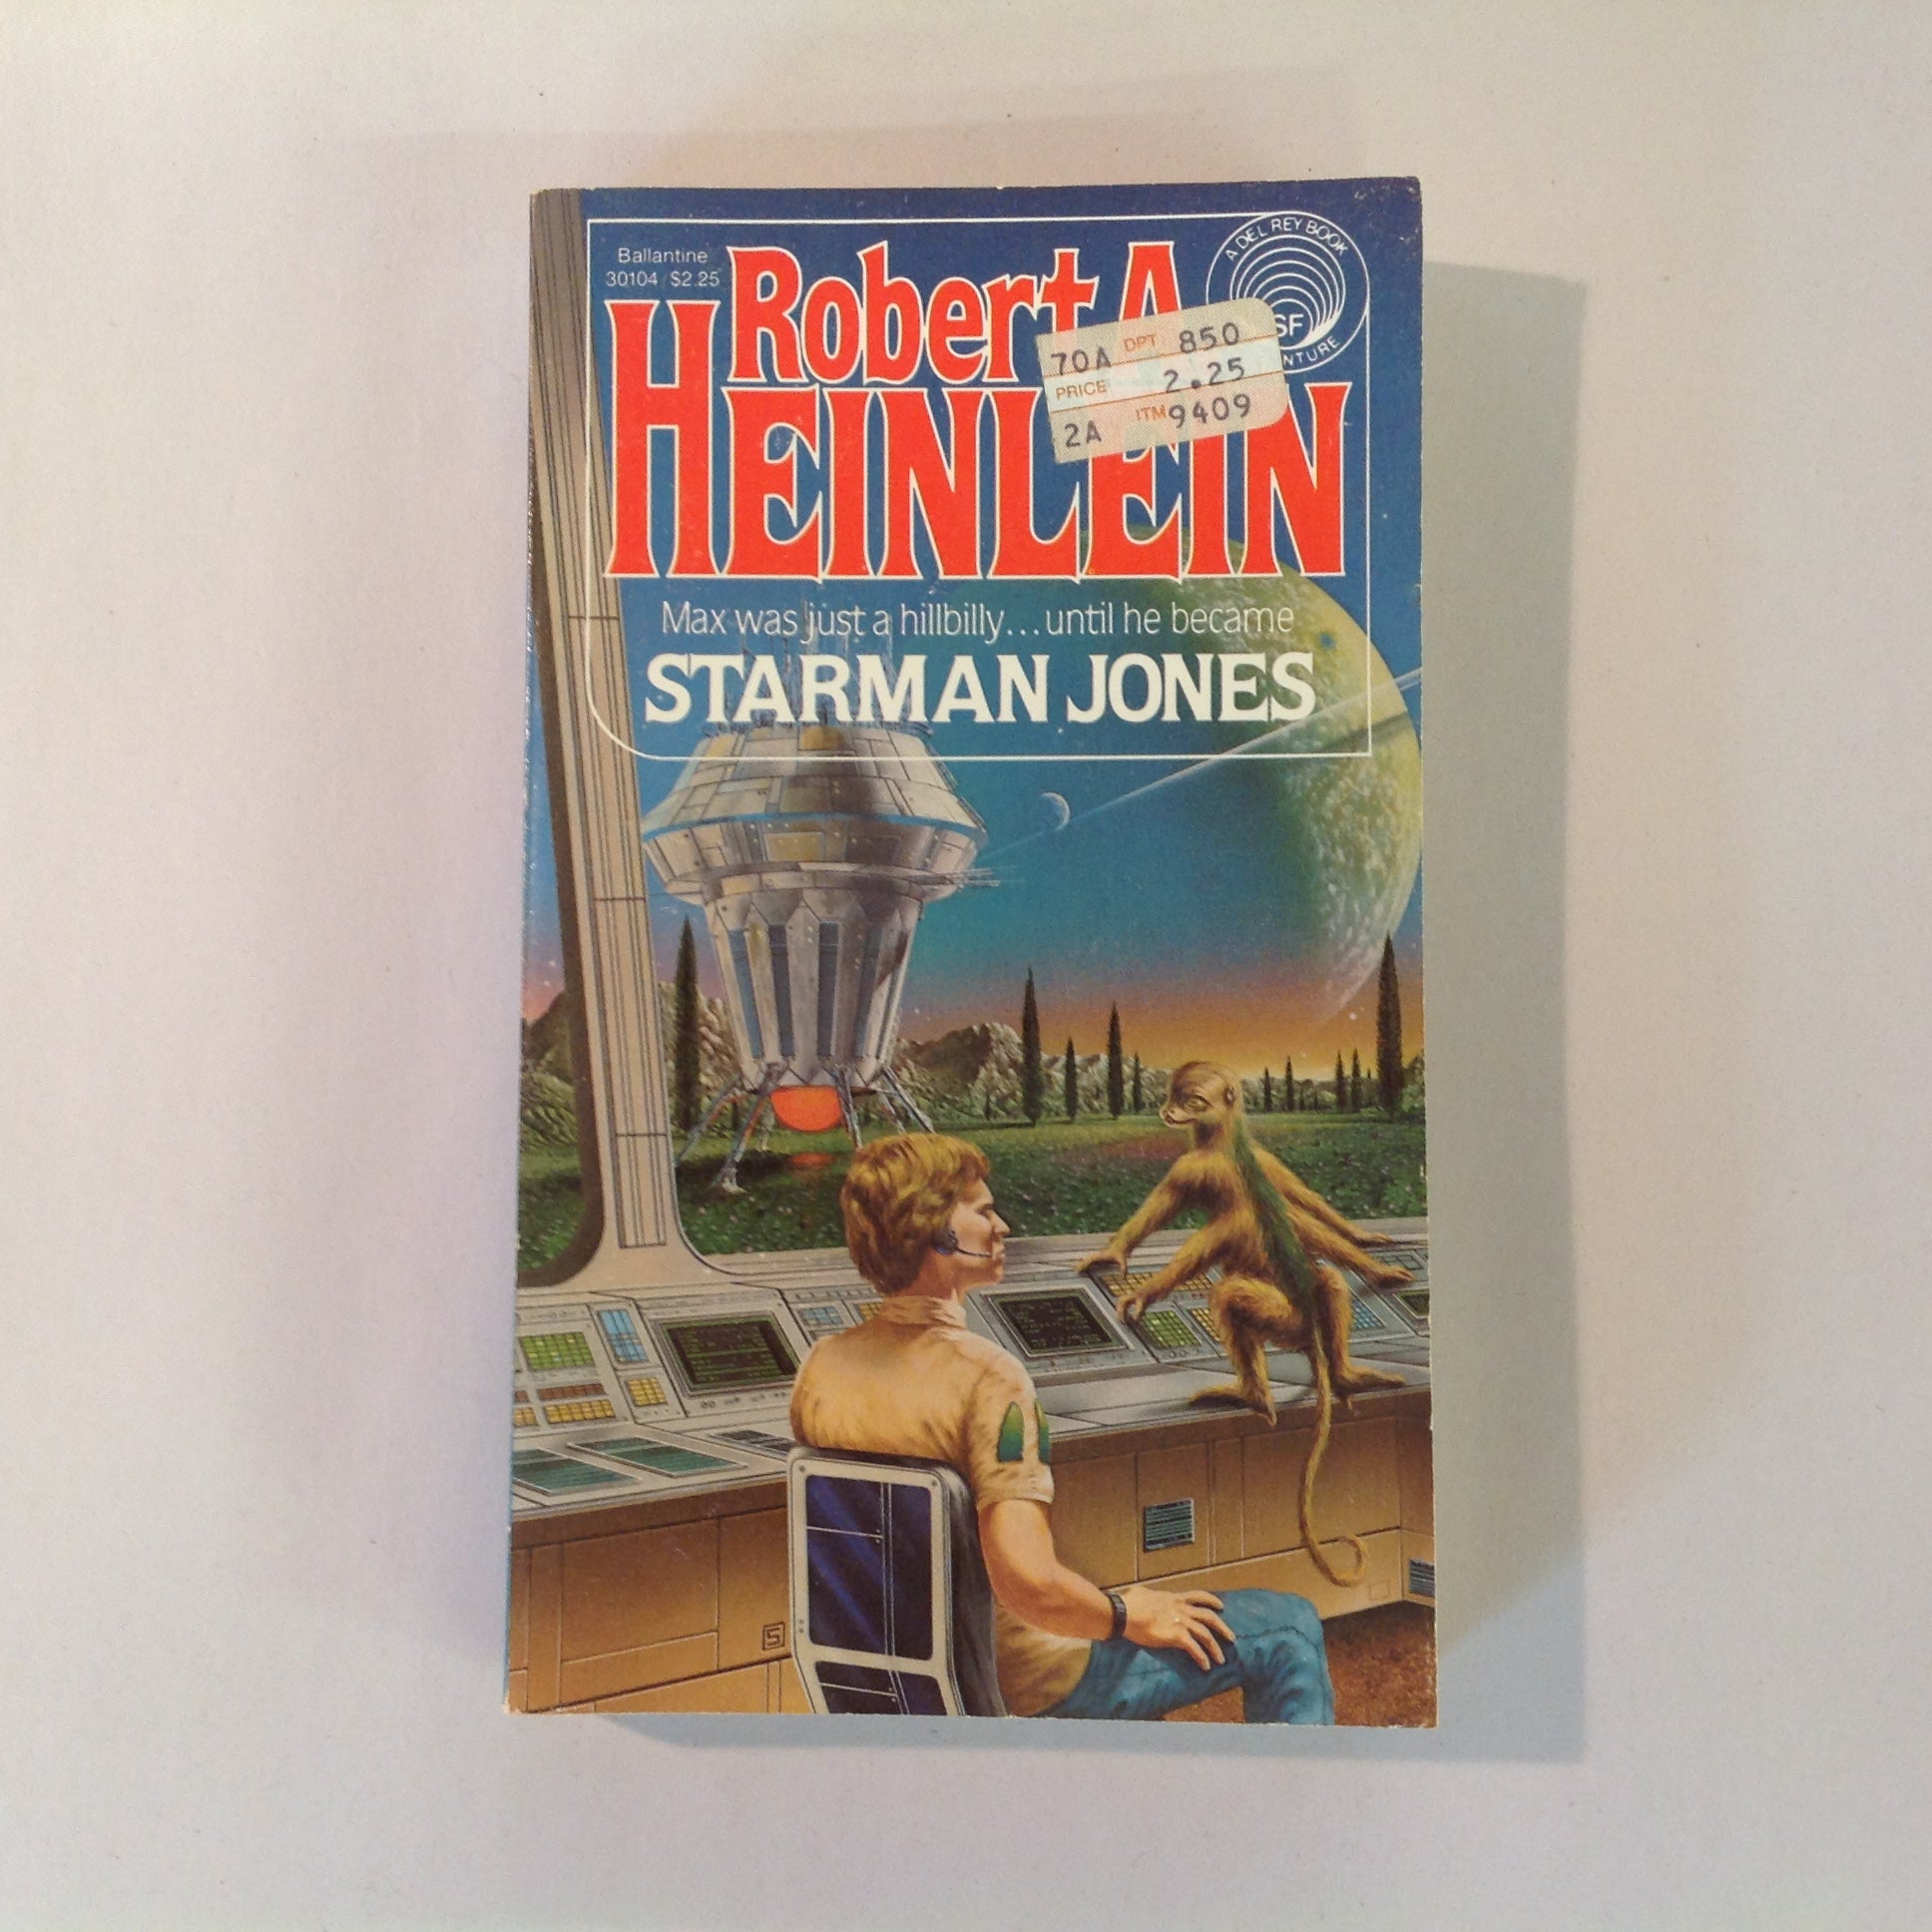 Vintage 1981 Mass Market Paperback STARMAN JONES Robert Heinlein